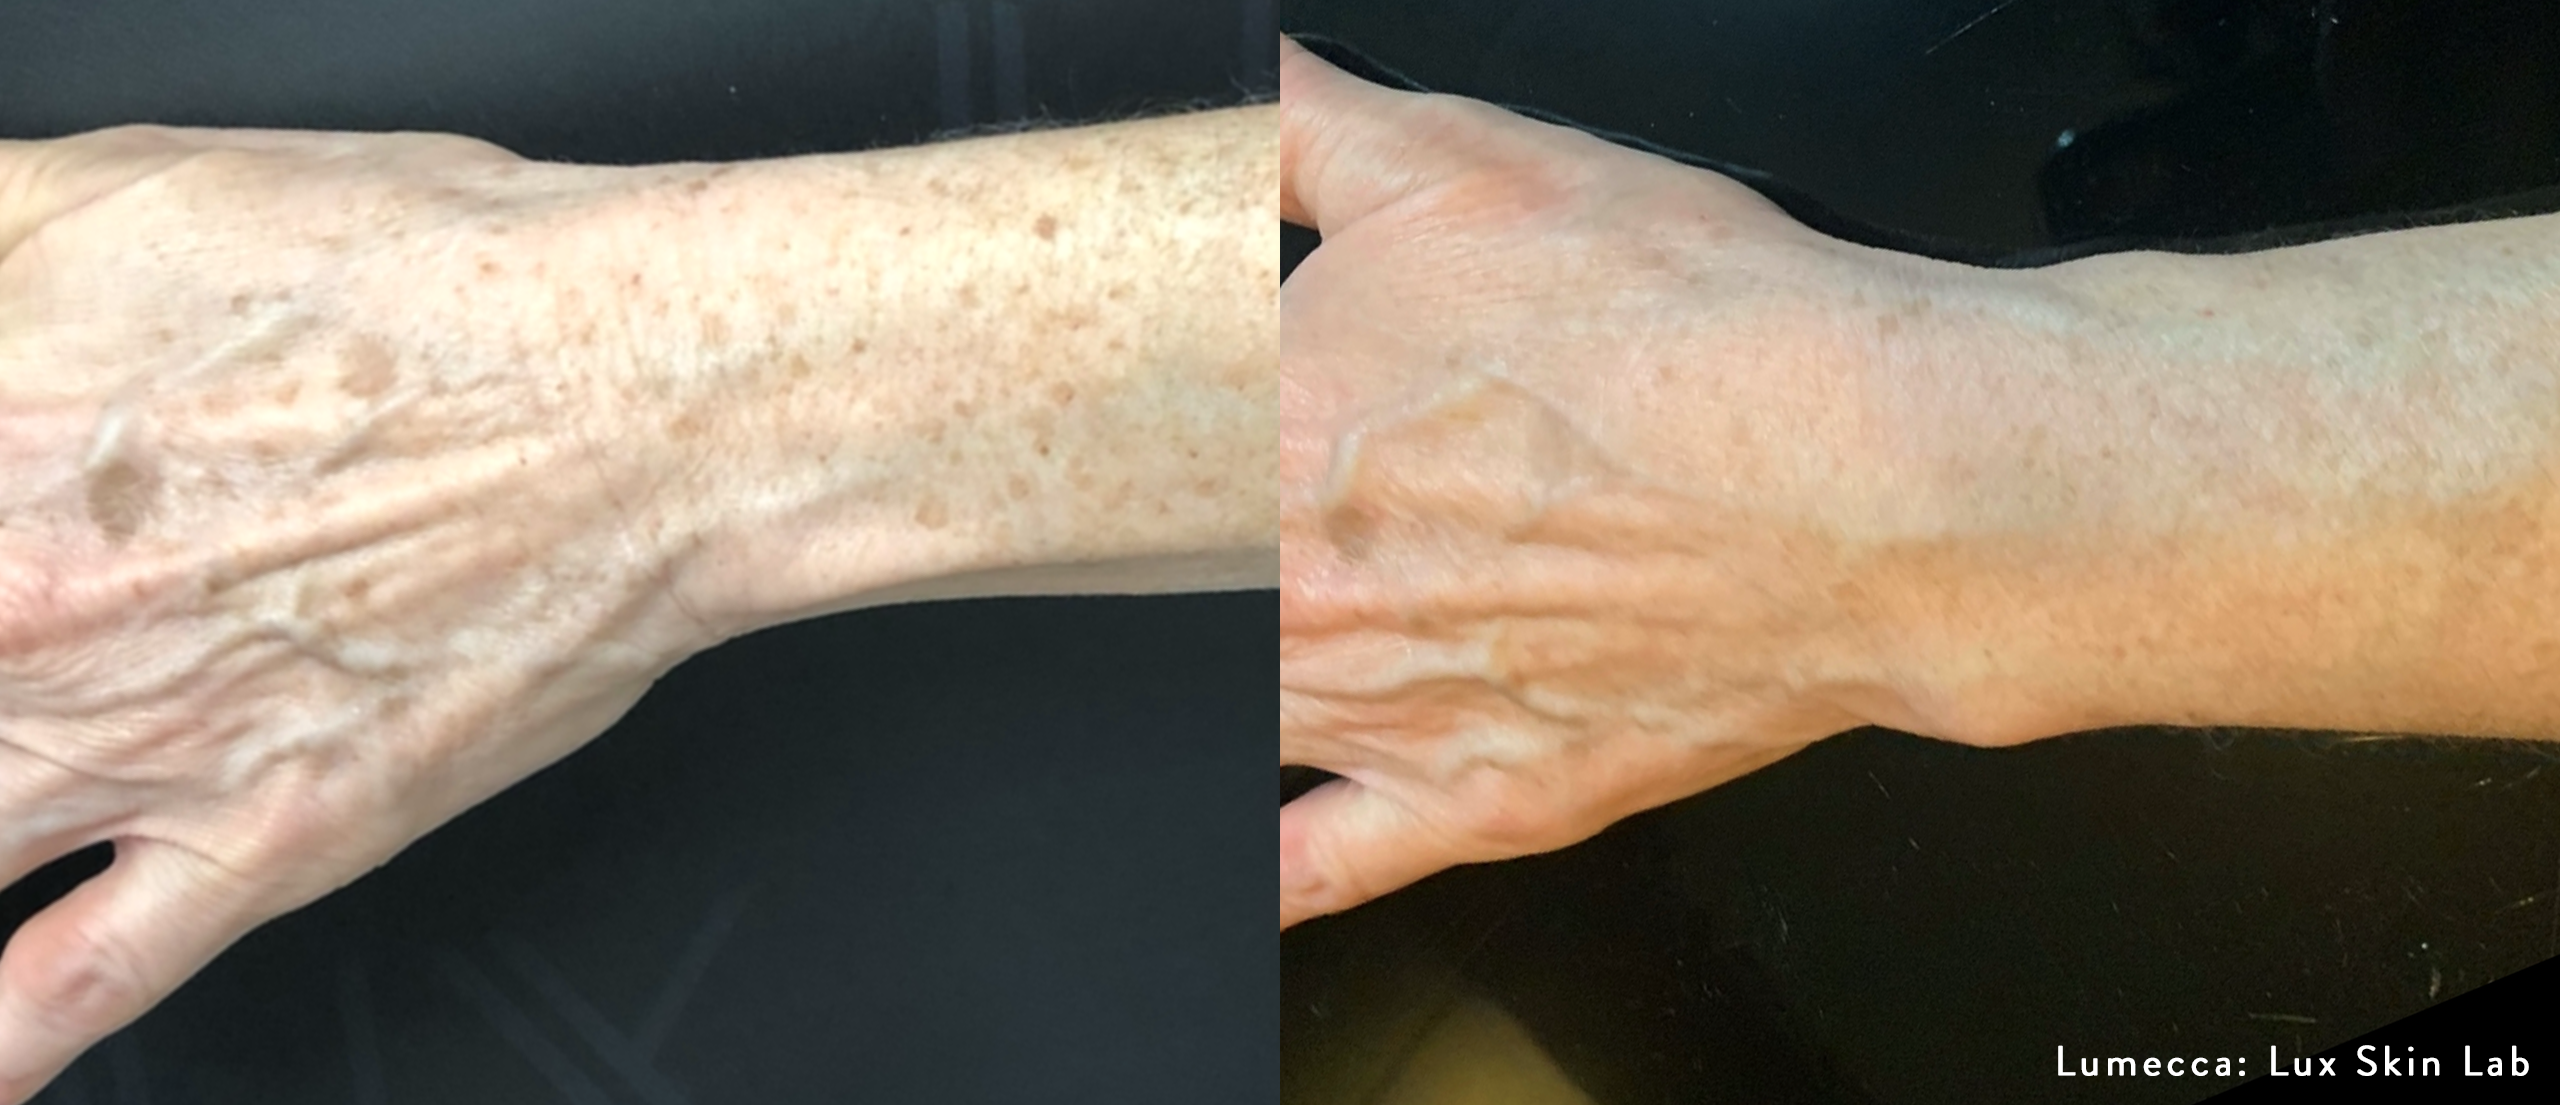 Lumecca IPL laser treatment, hands, brown spots, sun spots, pigmentation, age spots, sun damage, Lumecca before and after